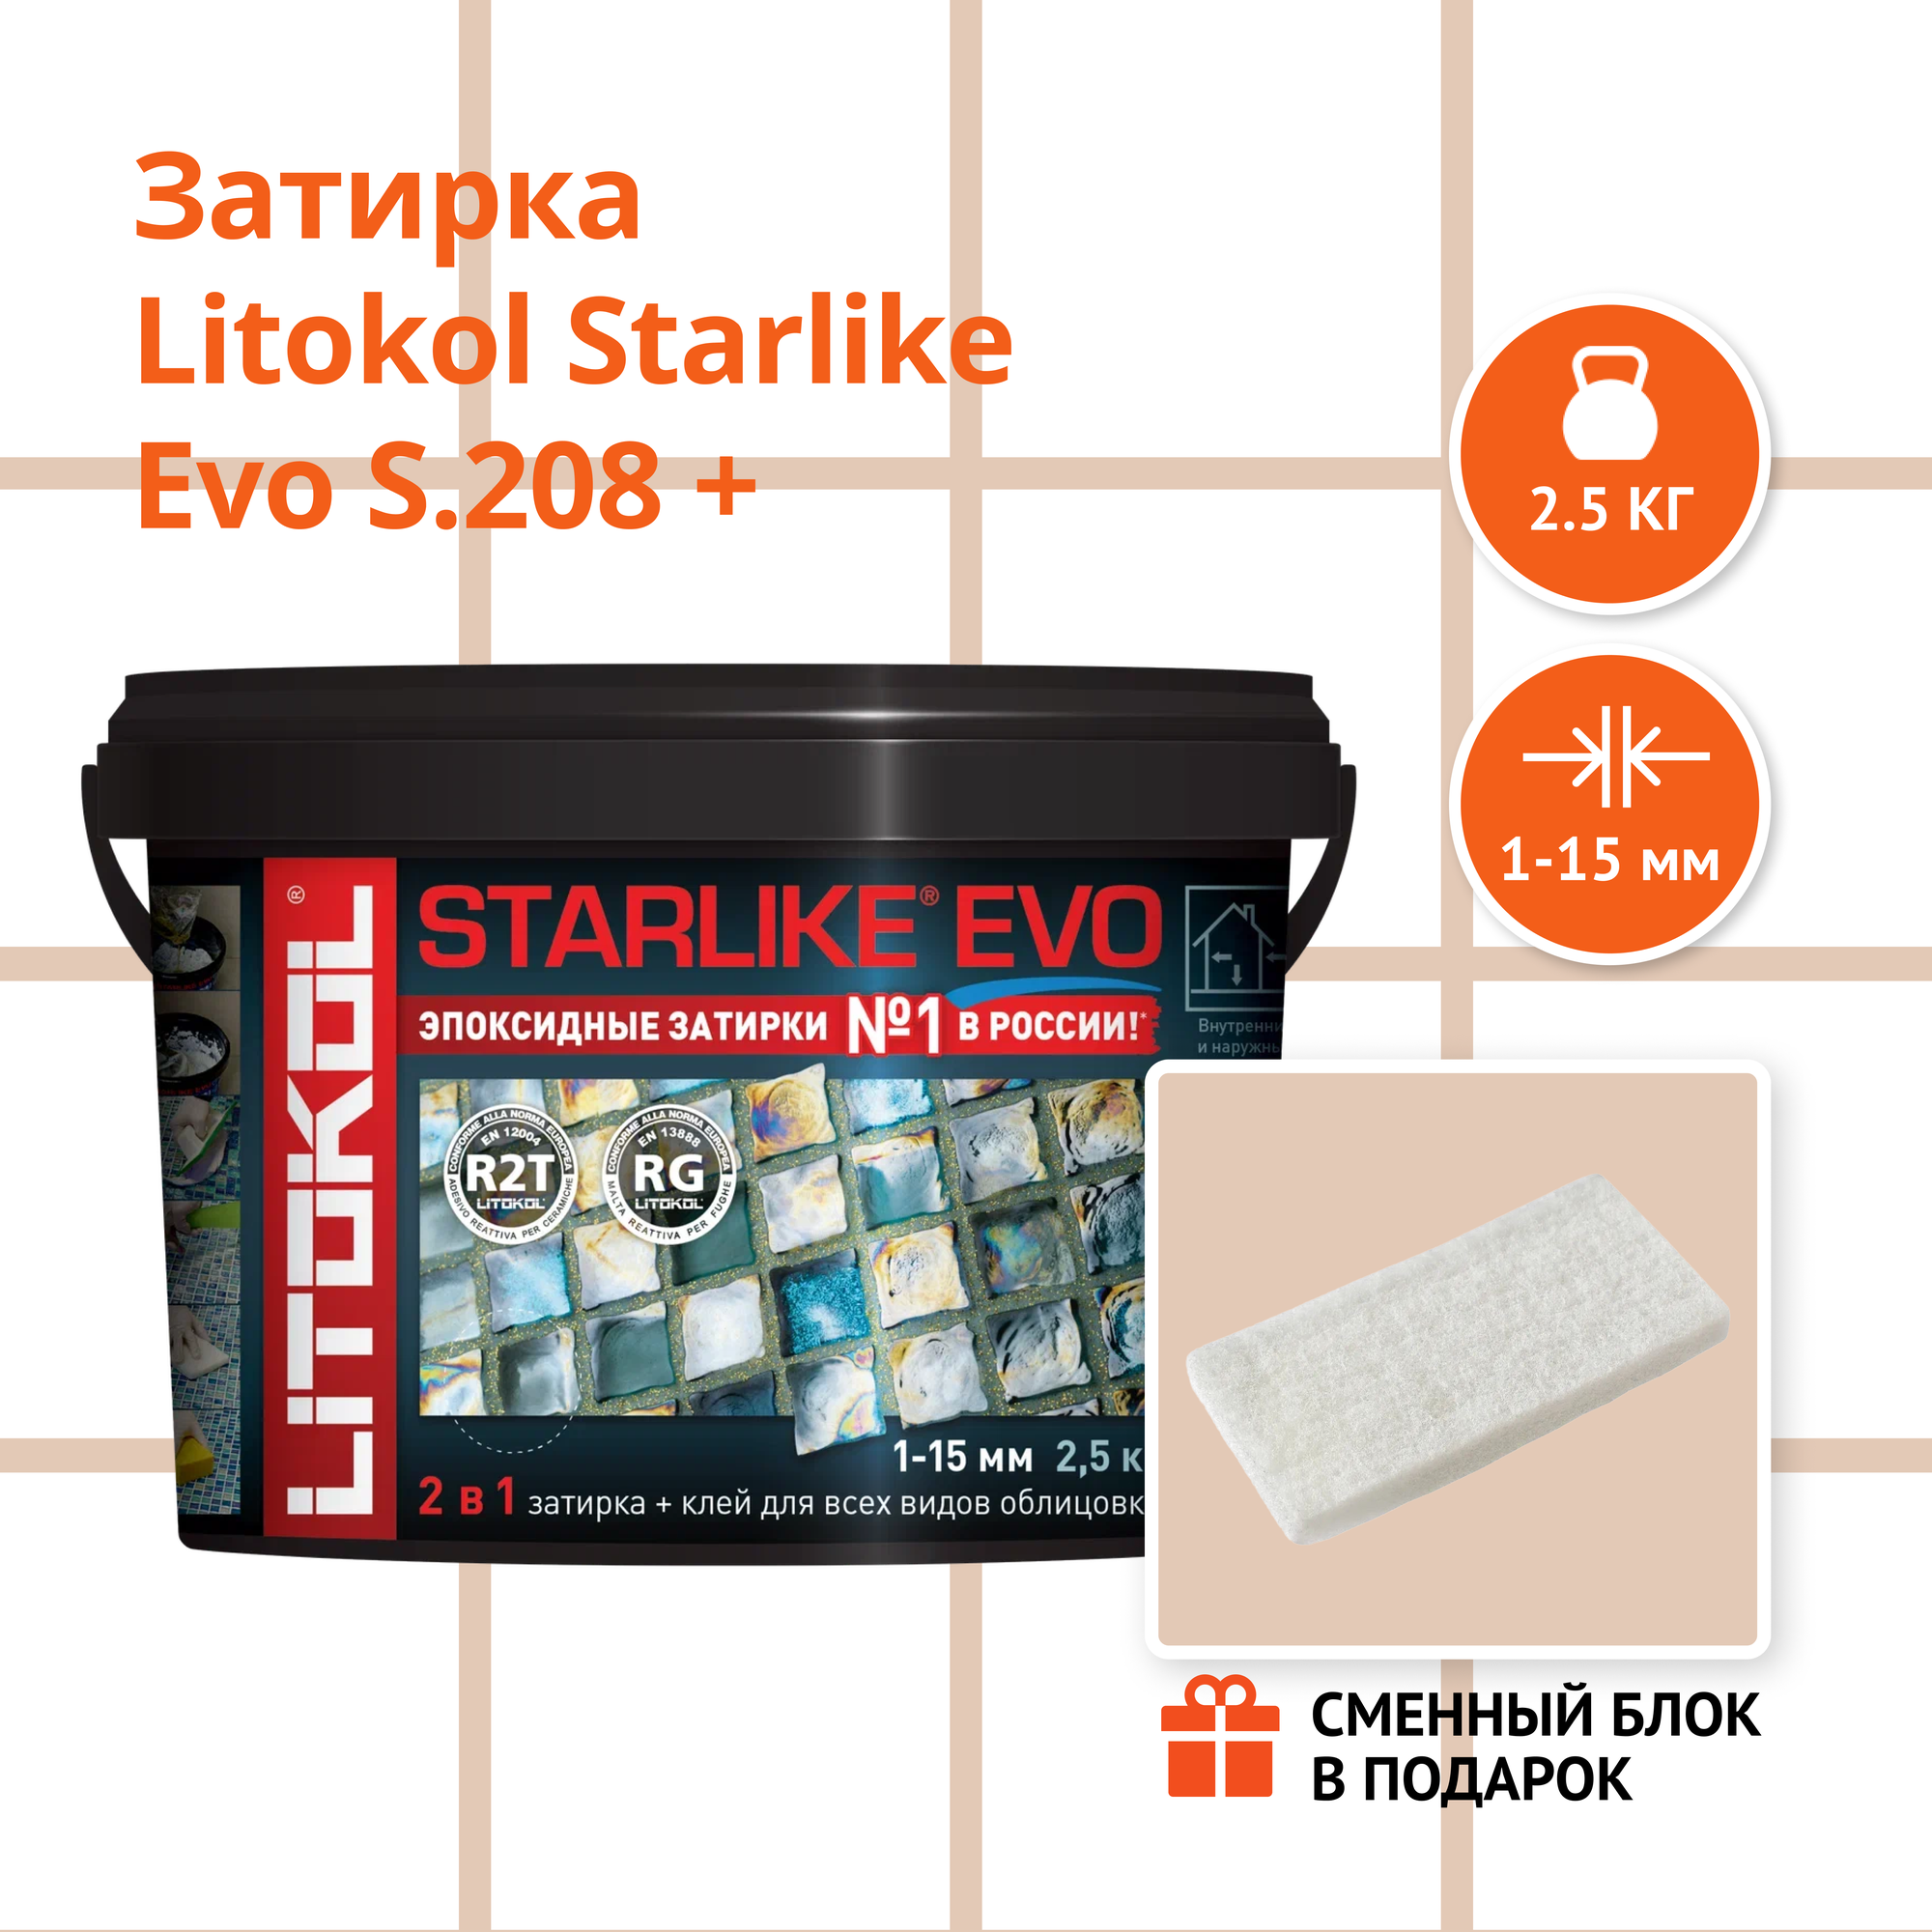 Затирка LITOKOL STARLIKE EVO S.235 CAFFE 2.5 кг + Сменный блок в подарок